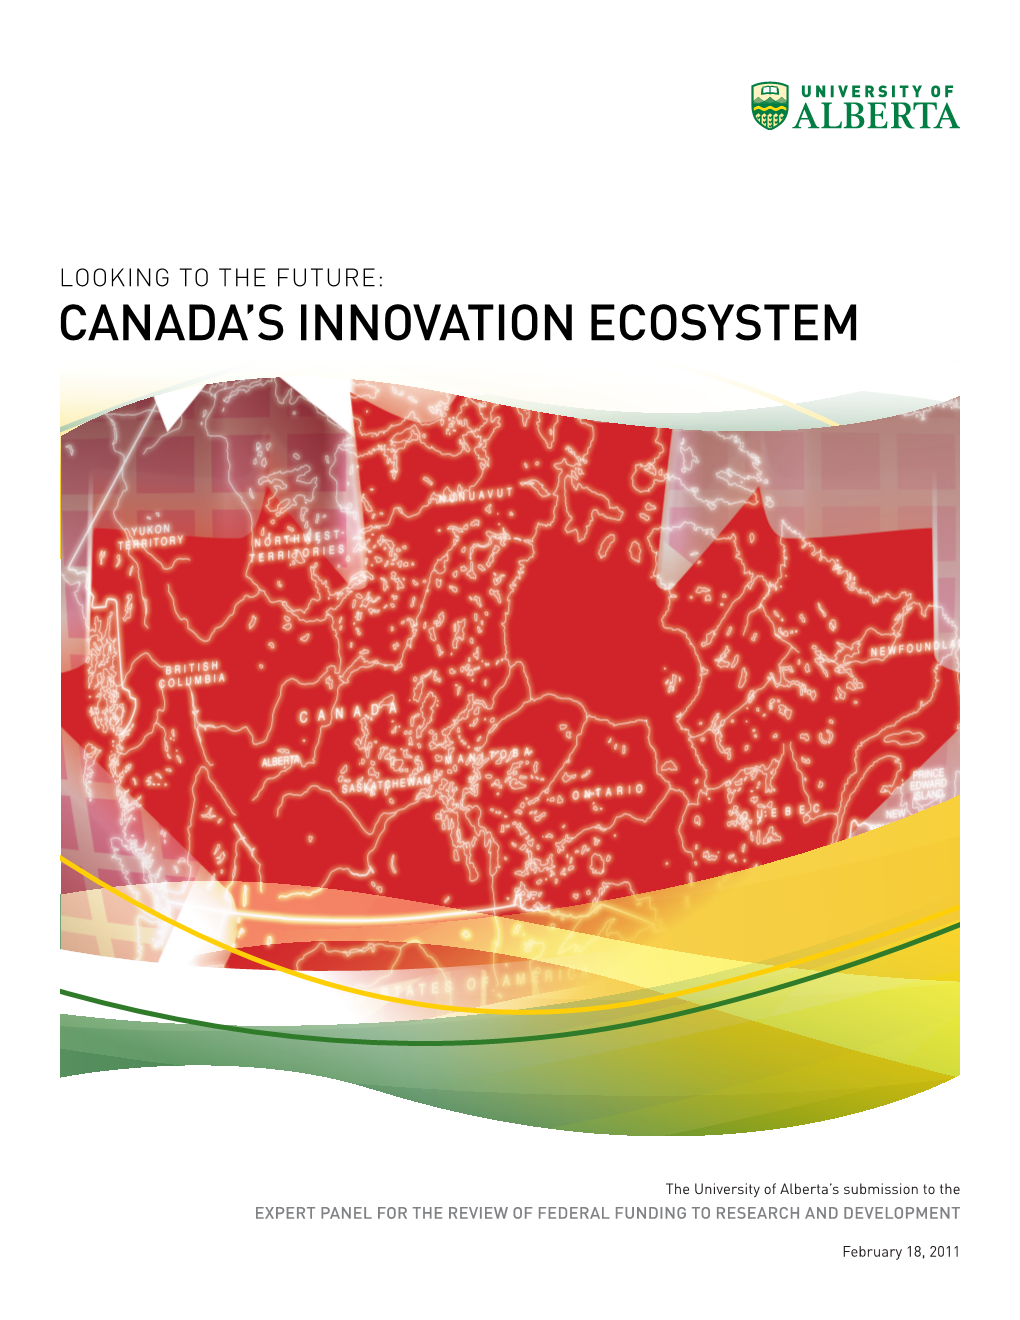 Canada's Innovation Ecosystem